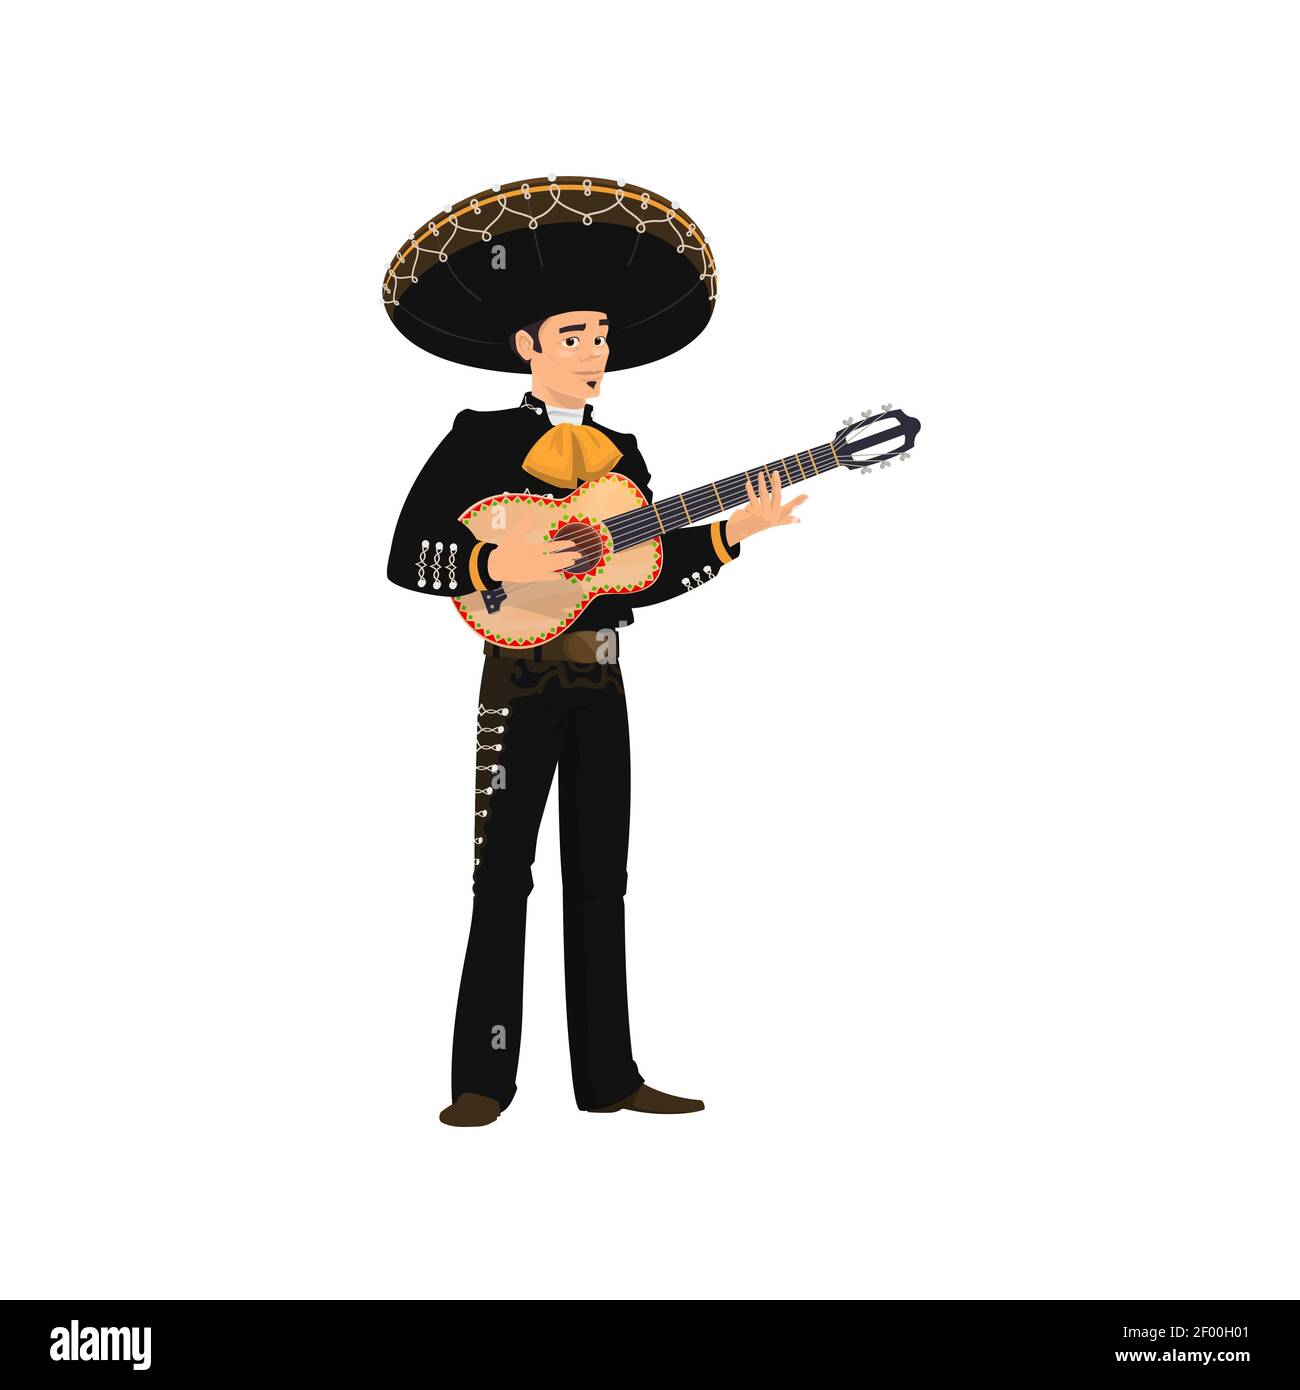 Guitarrista mexicano fotografías e imágenes de alta resolución - Alamy